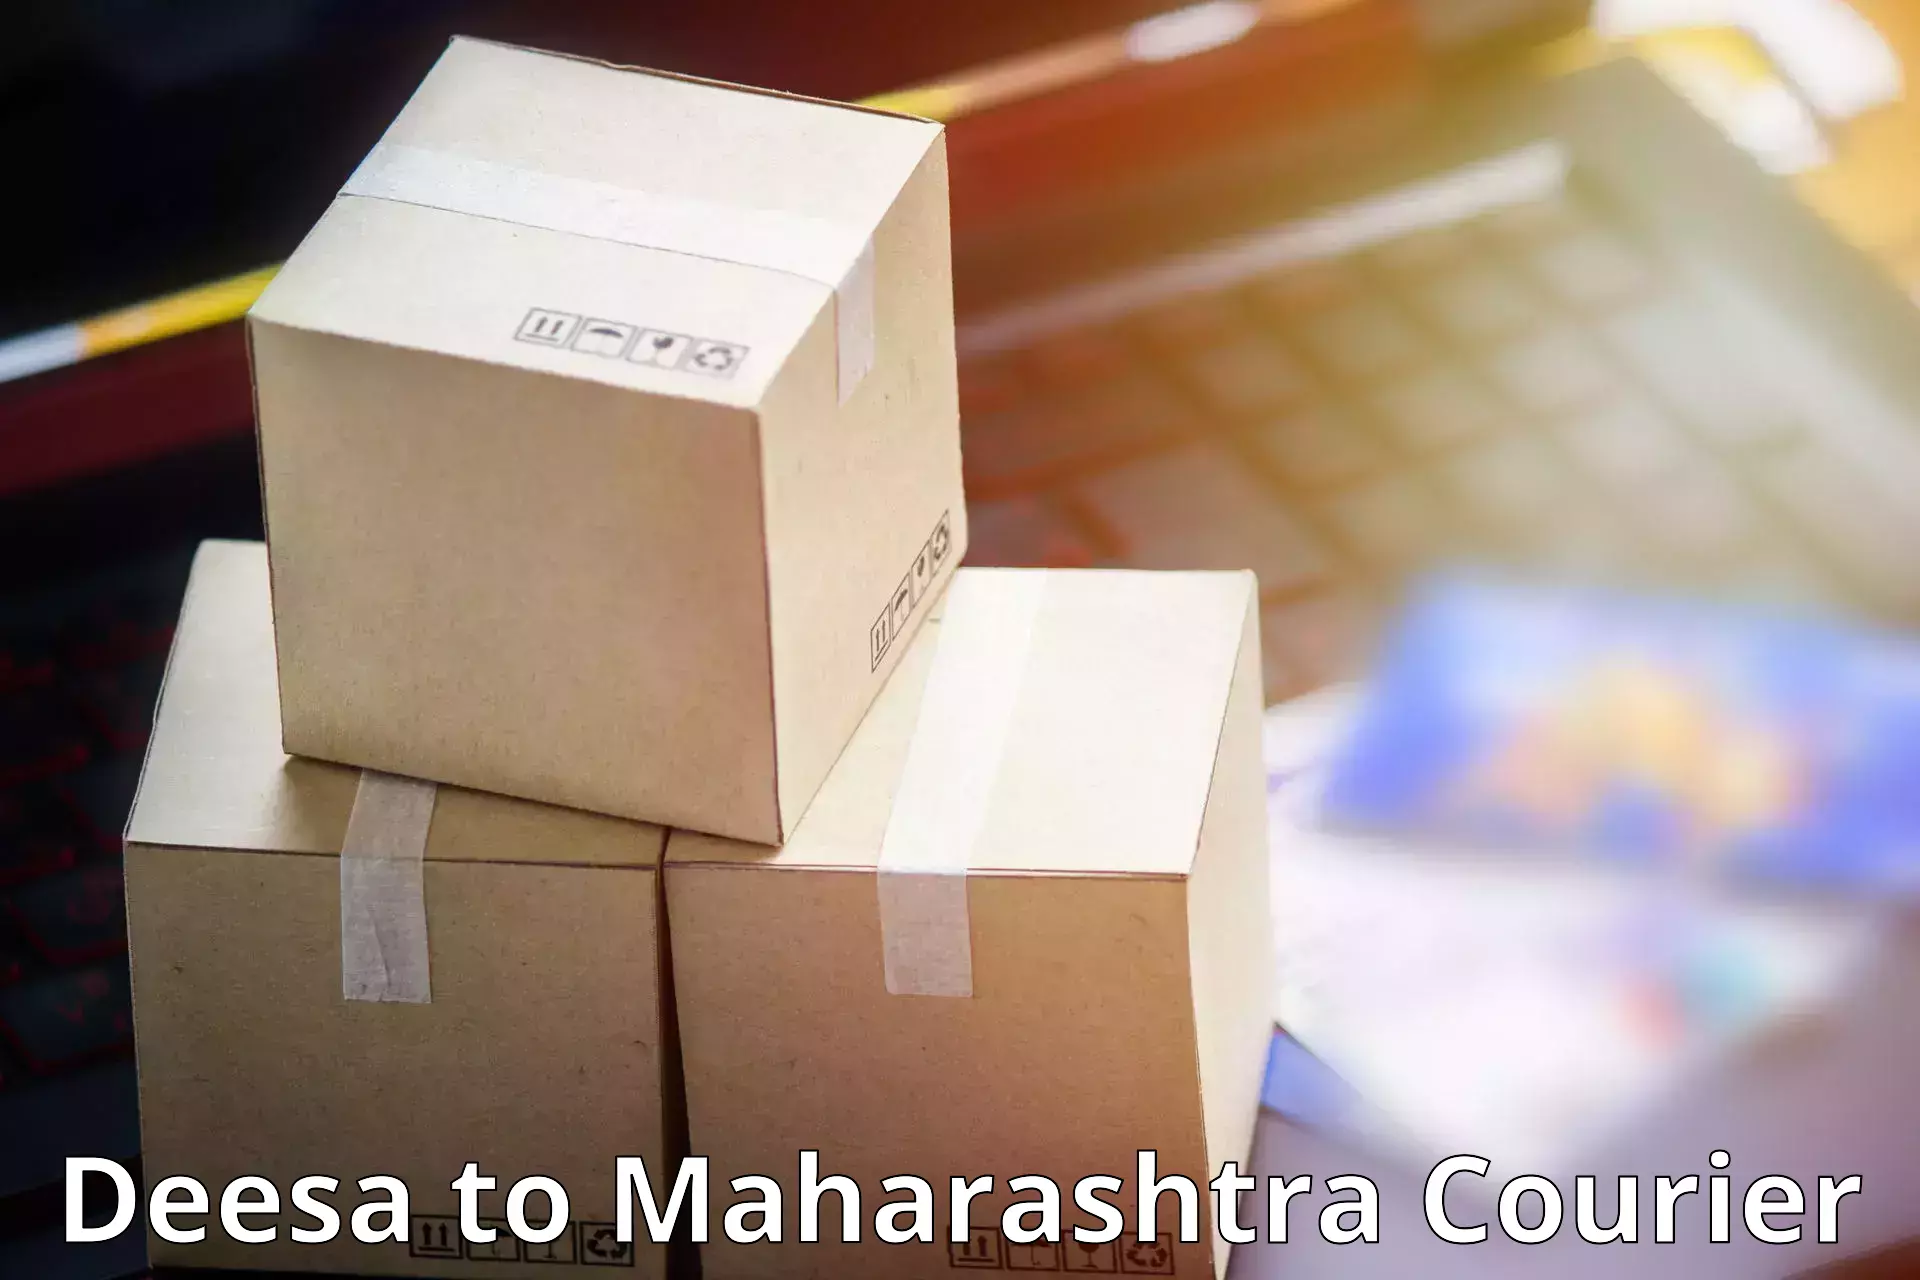 Smart shipping technology Deesa to Maharashtra